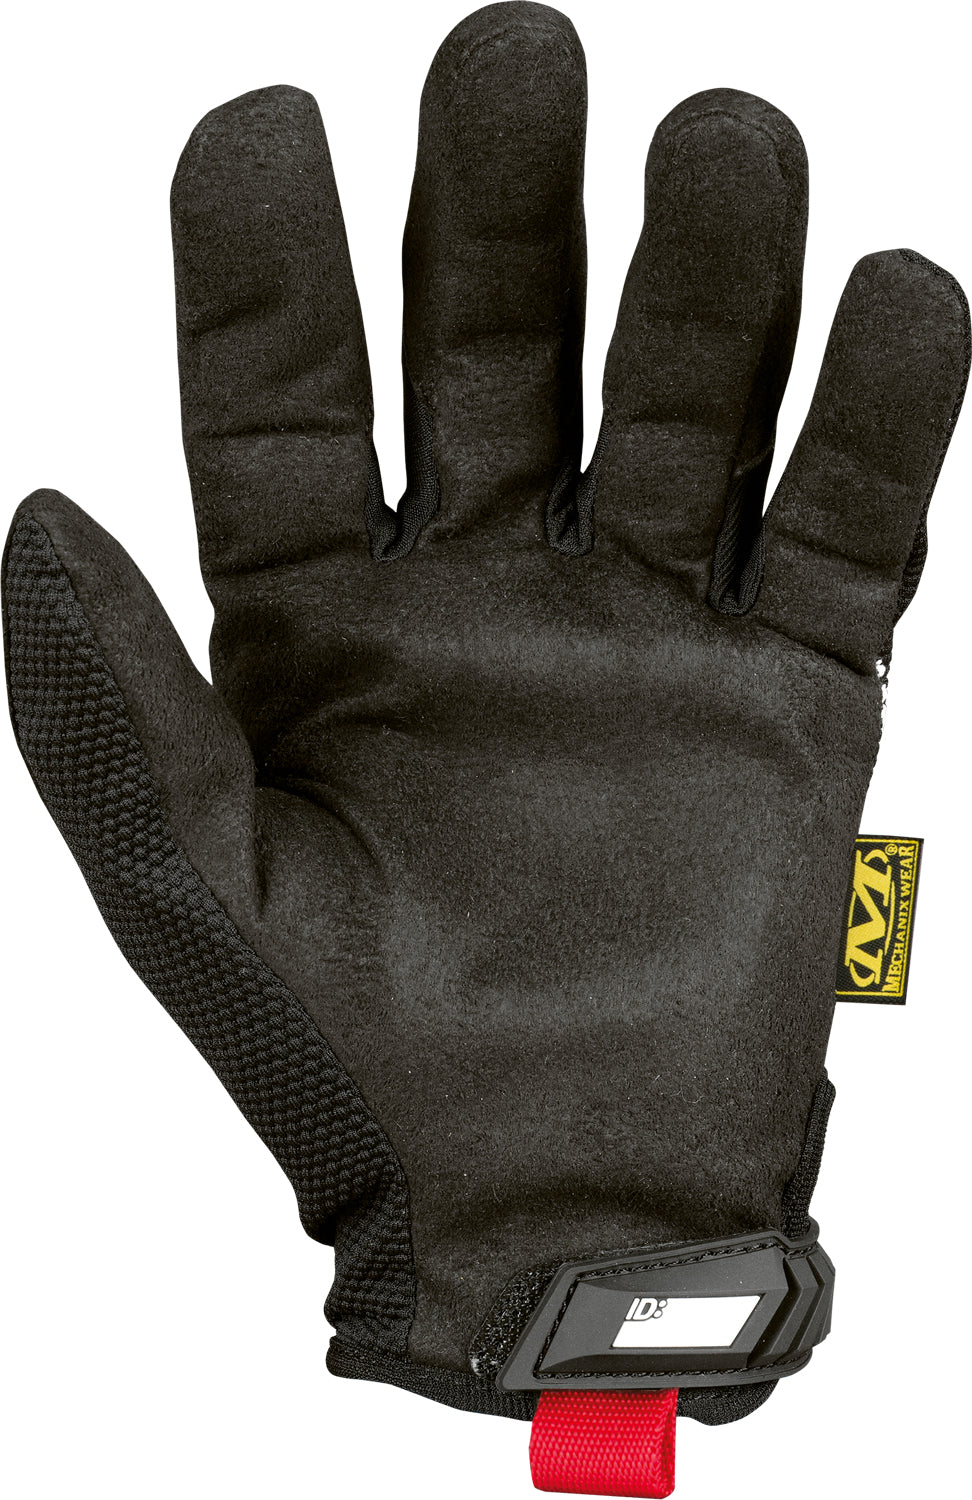 Mechanix Gloves Original